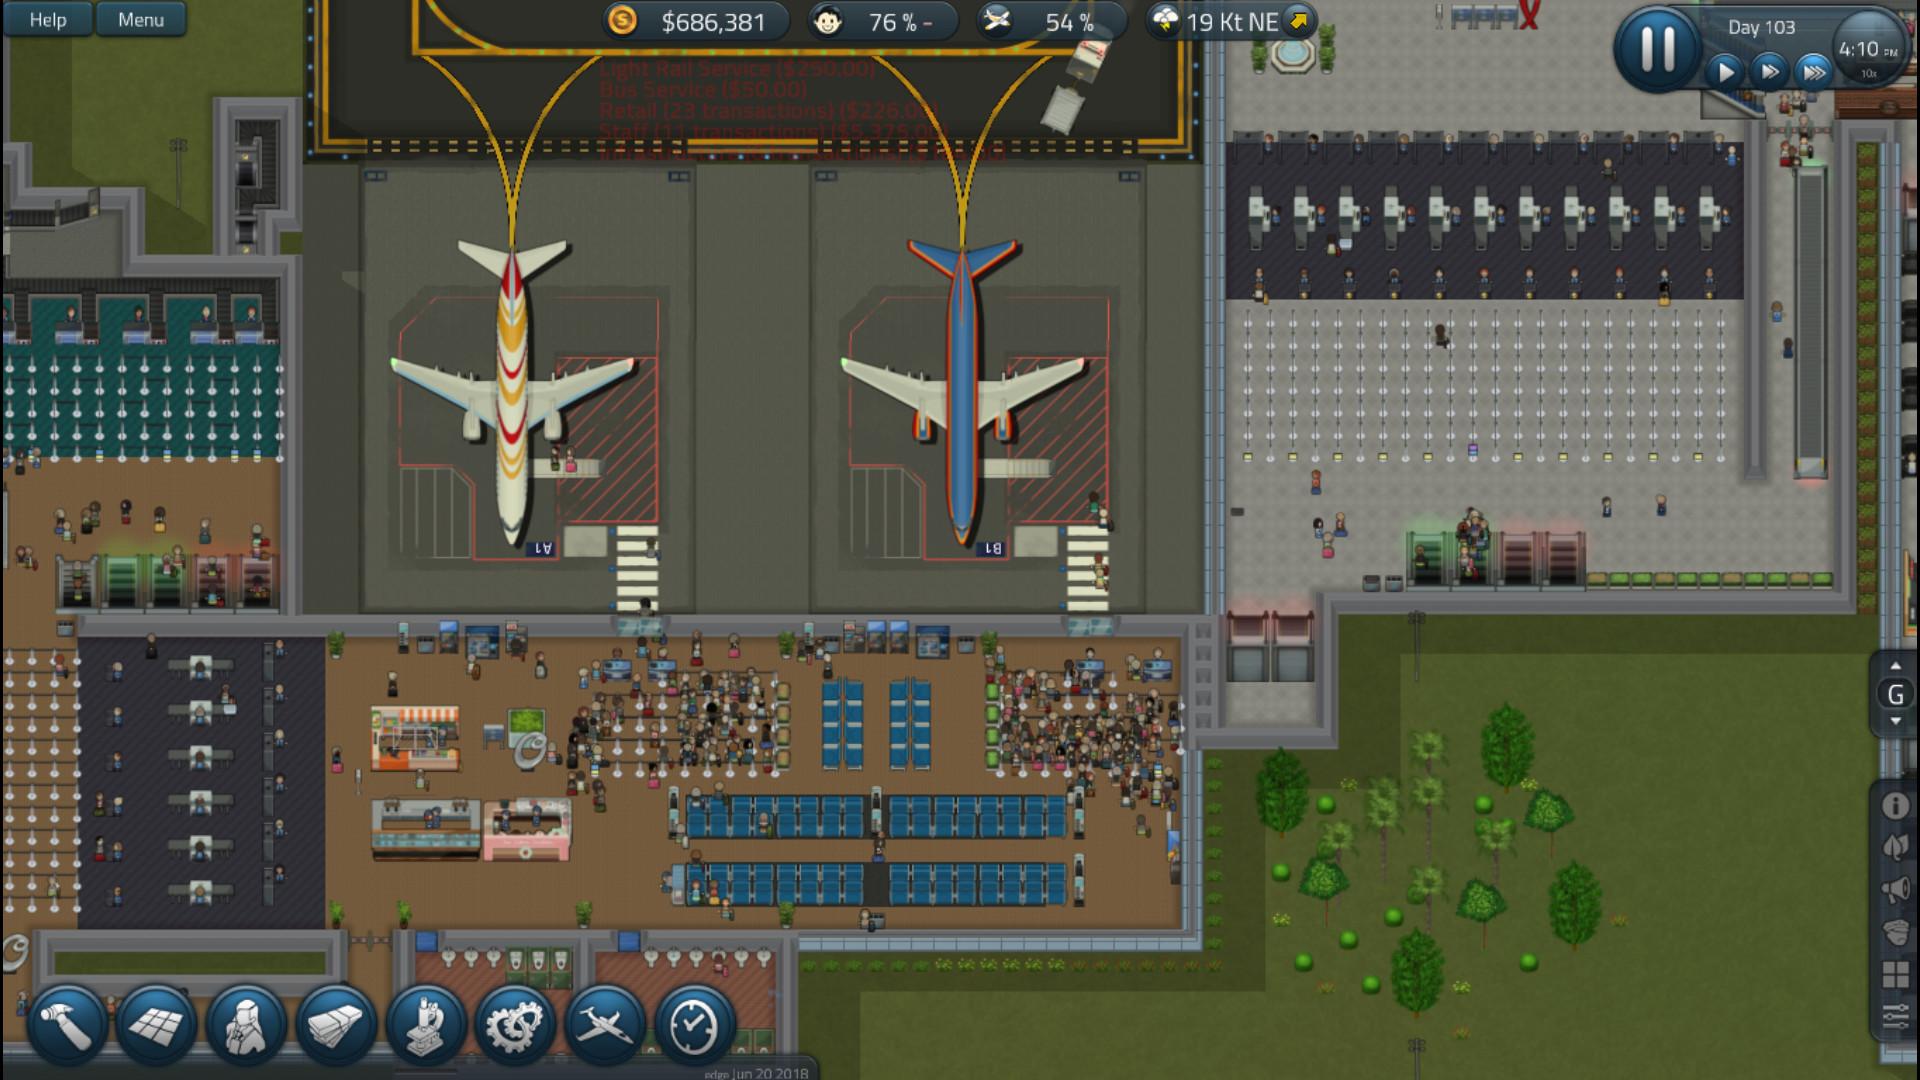 Screenshot №29 from game SimAirport